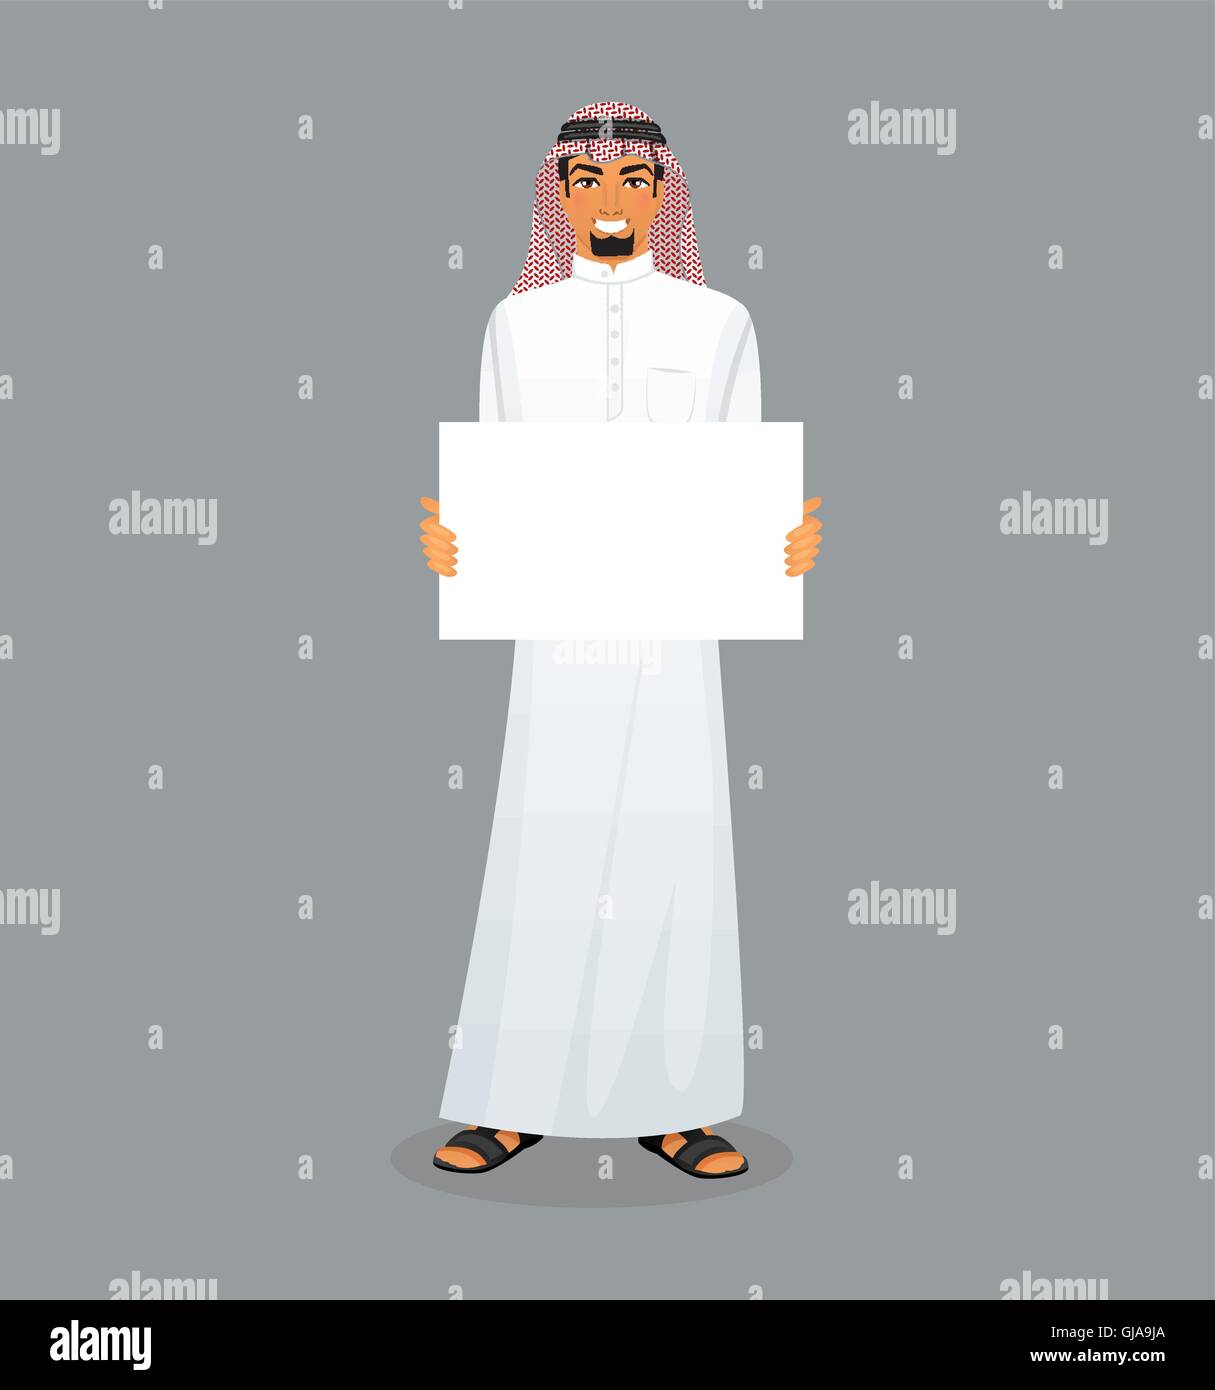 Arabic man character image Stock Vector